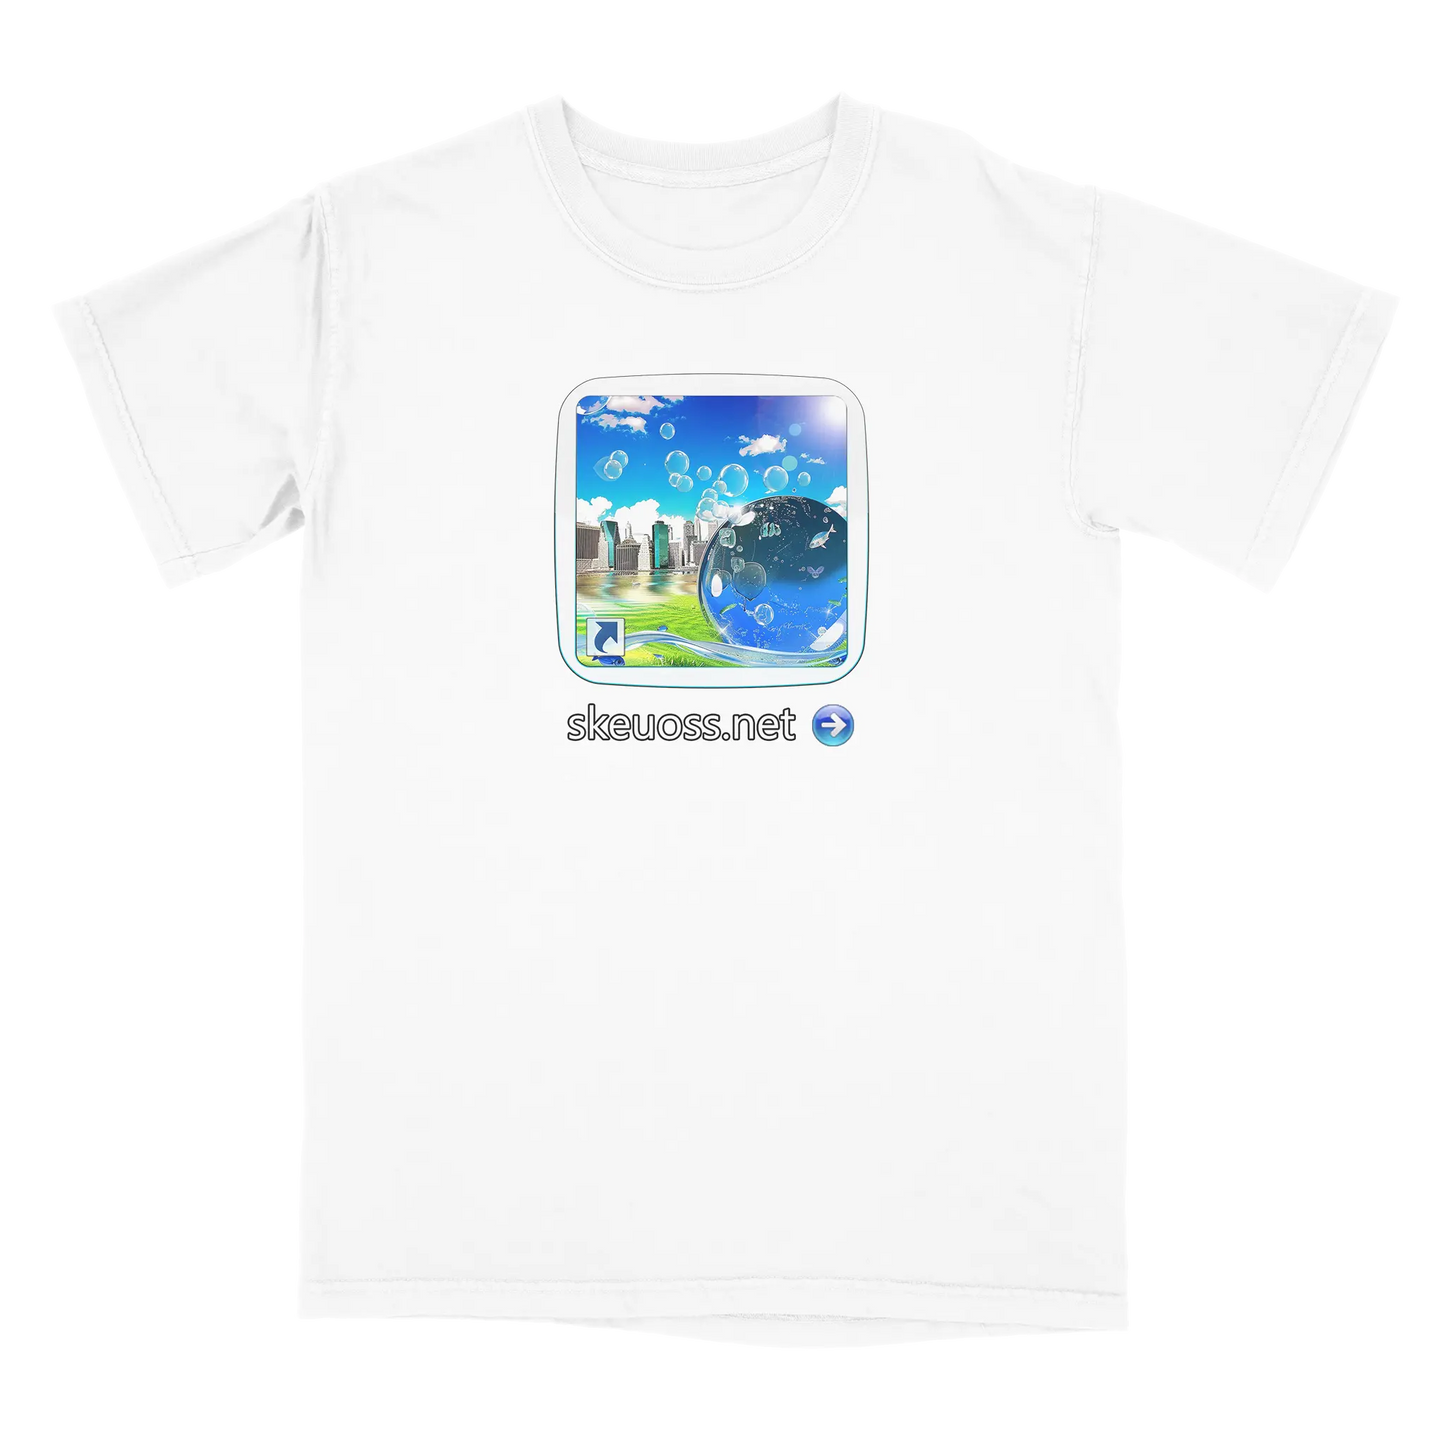 Frutiger Aero T-shirt - User Login Collection - User 395